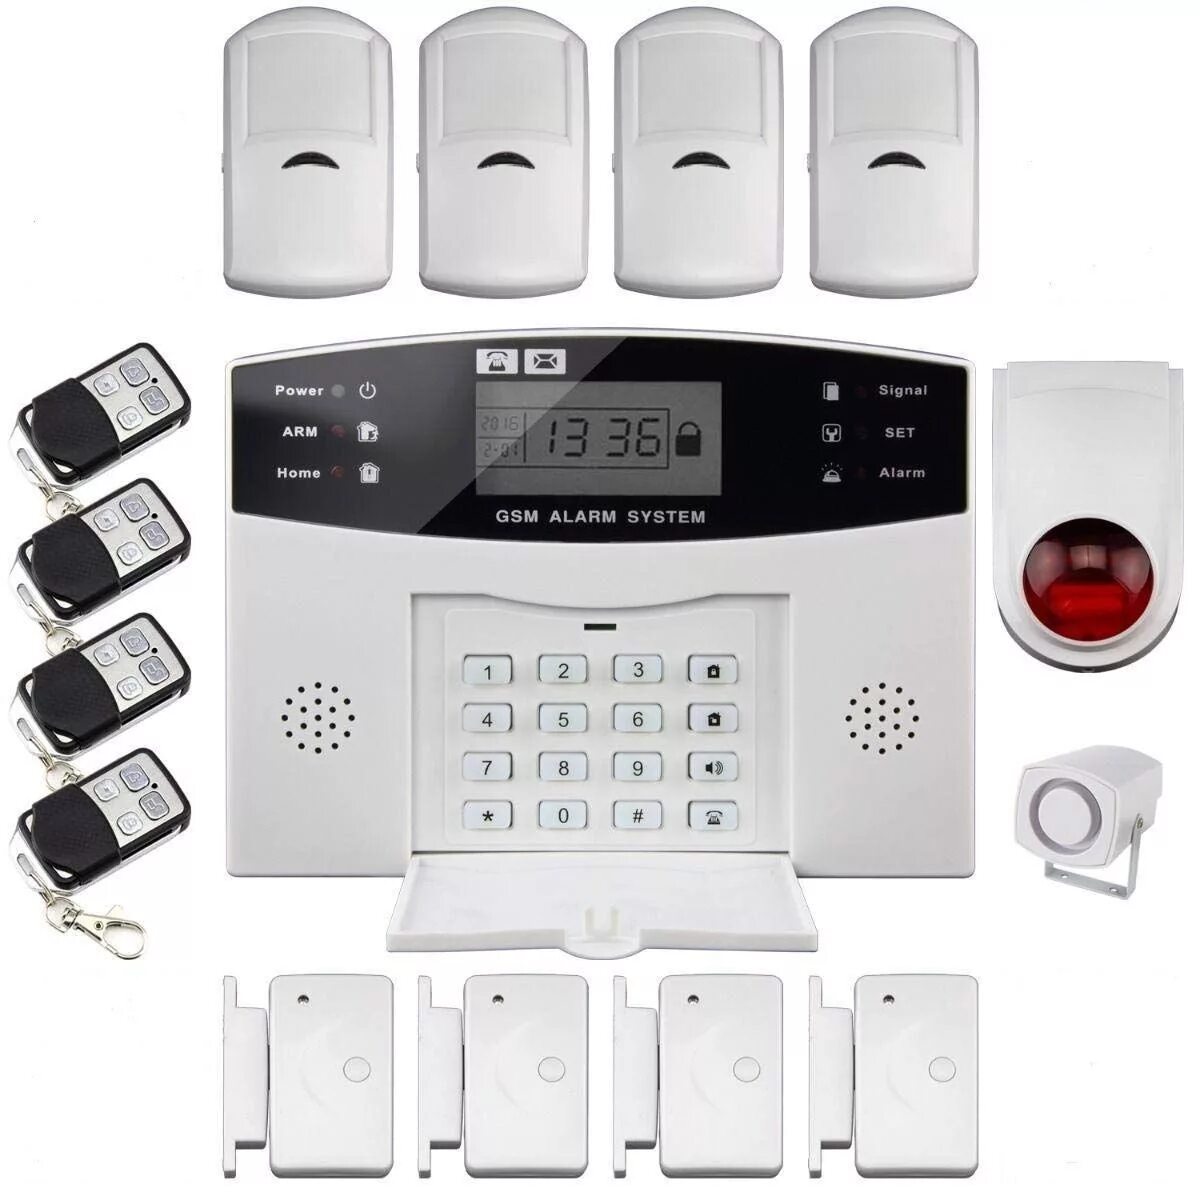 Keep the latest on home security systems. Камеры видеонаблюдения Digital Wireless Home Surveillance System. Alarm System Home. GSM сигнализация и умный дом. GSM сигнализация от сети.